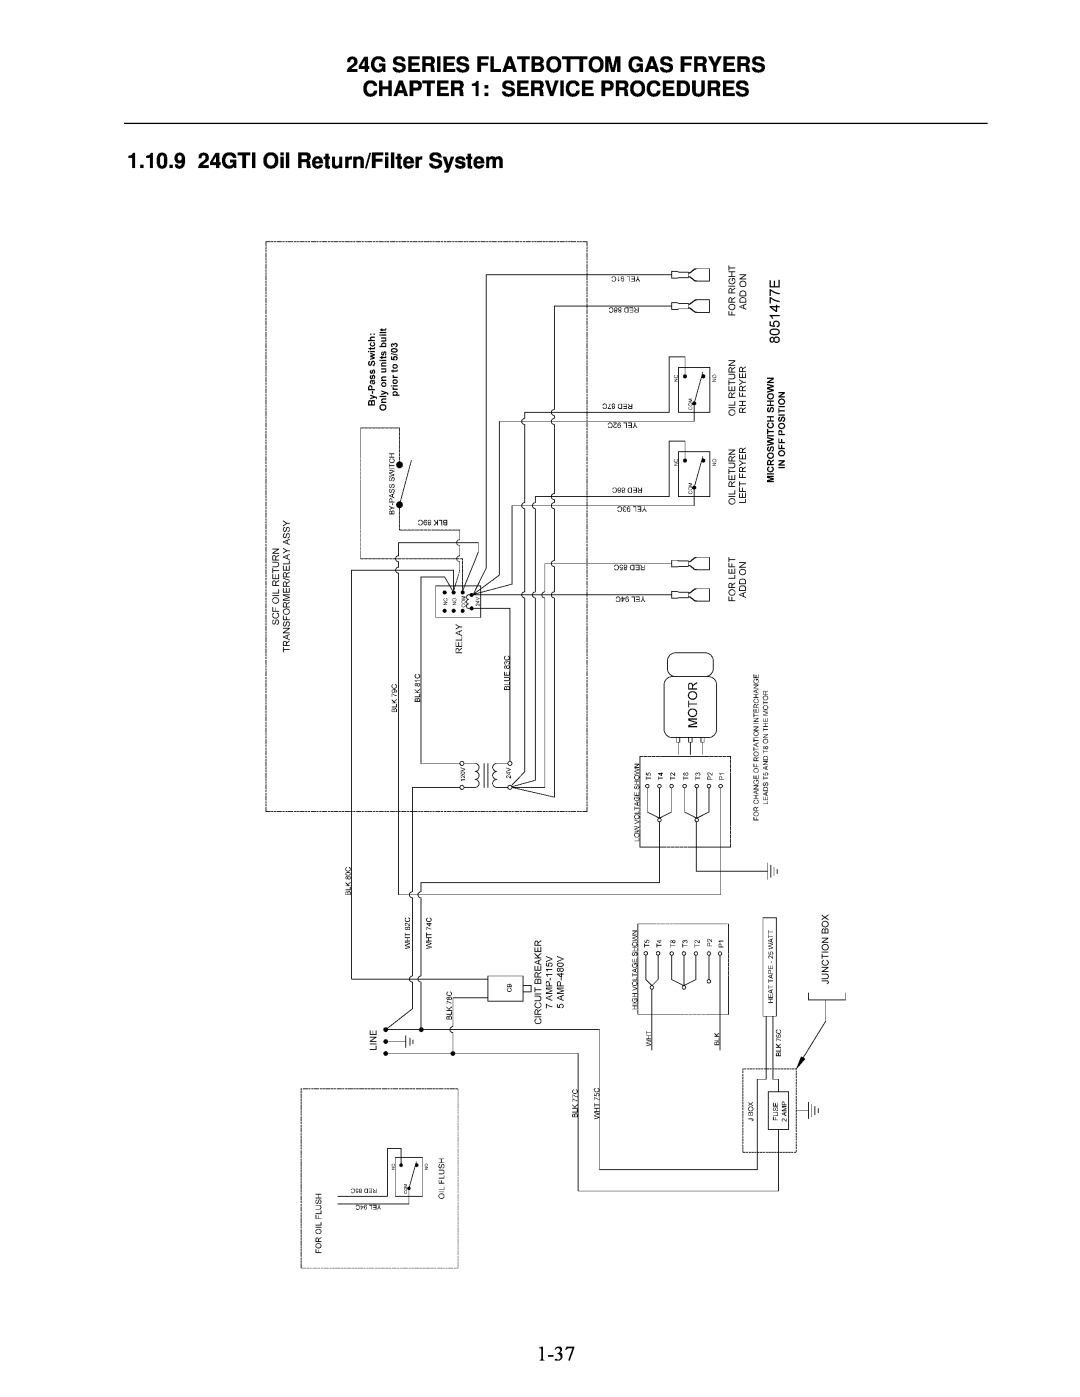 Frymaster 2424G, 1824G manual 1.10.9 24GTI Oil Return/Filter System 